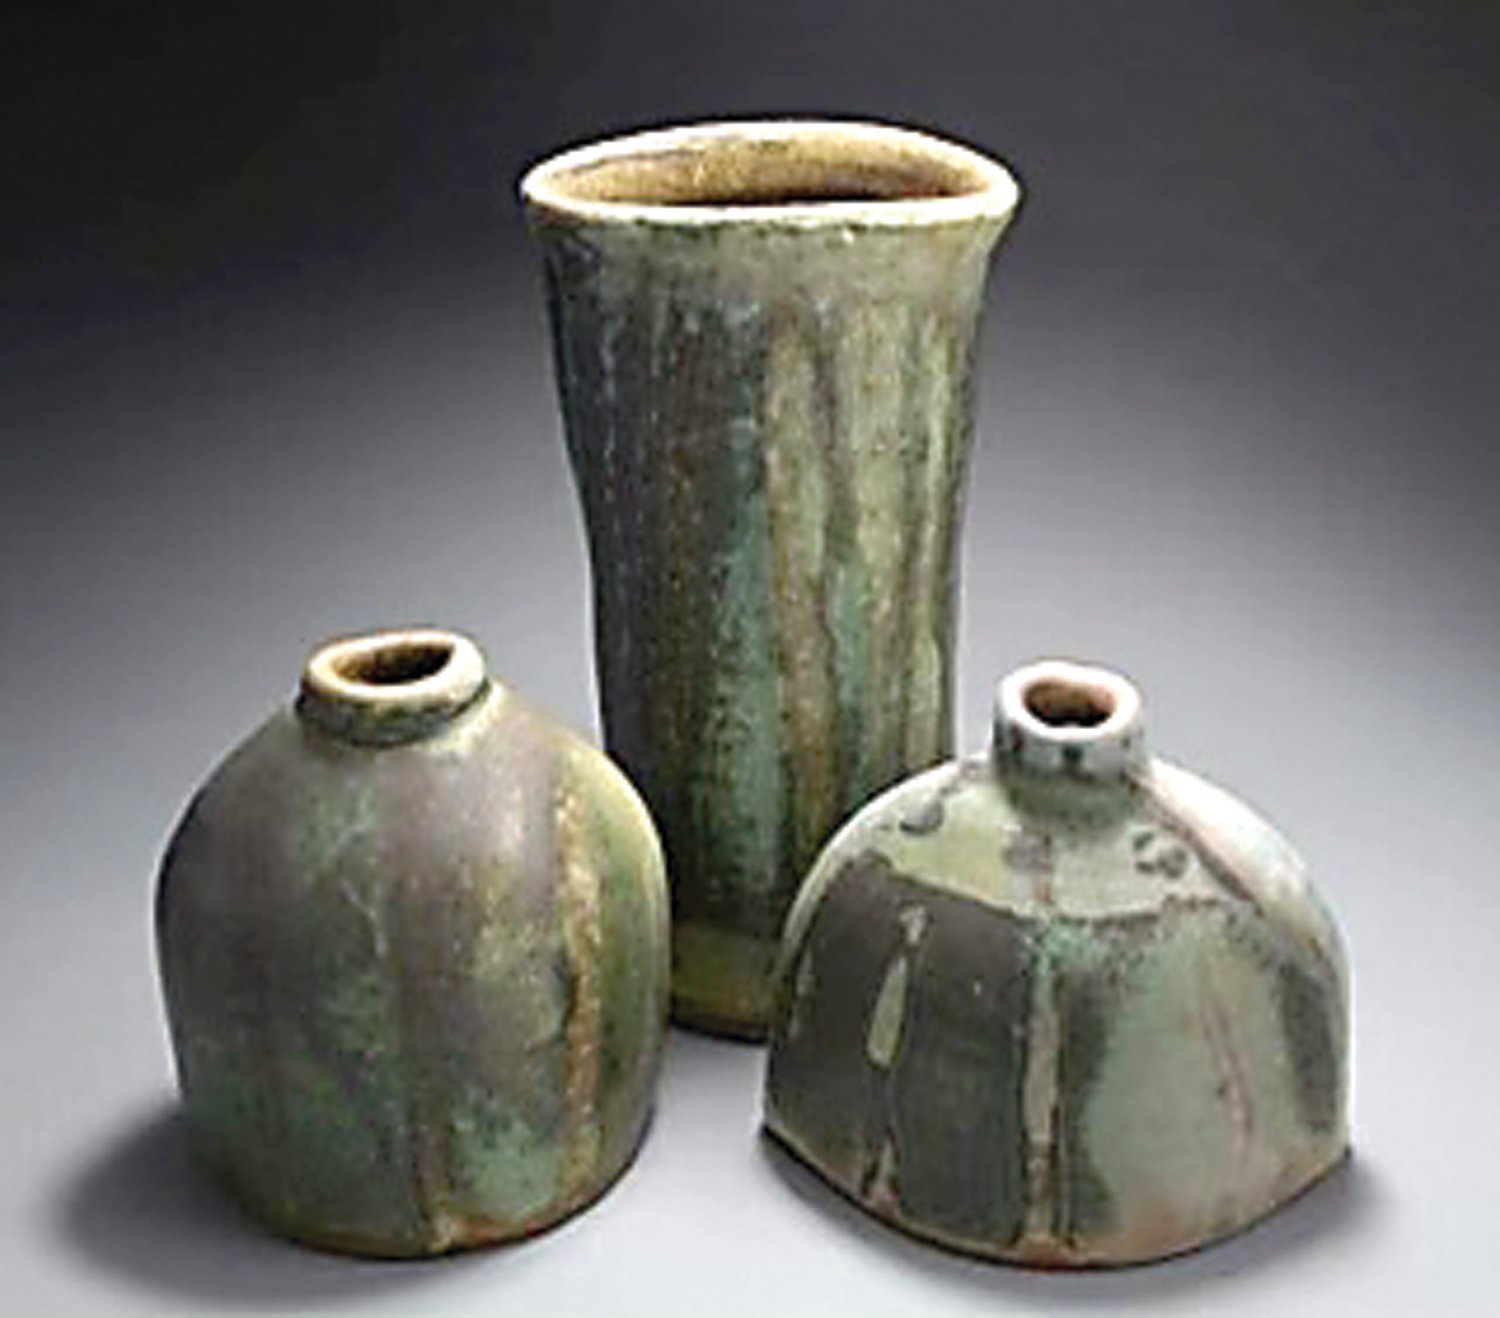 Ceramics by Gloria Kosco from Pt. Pleasant.